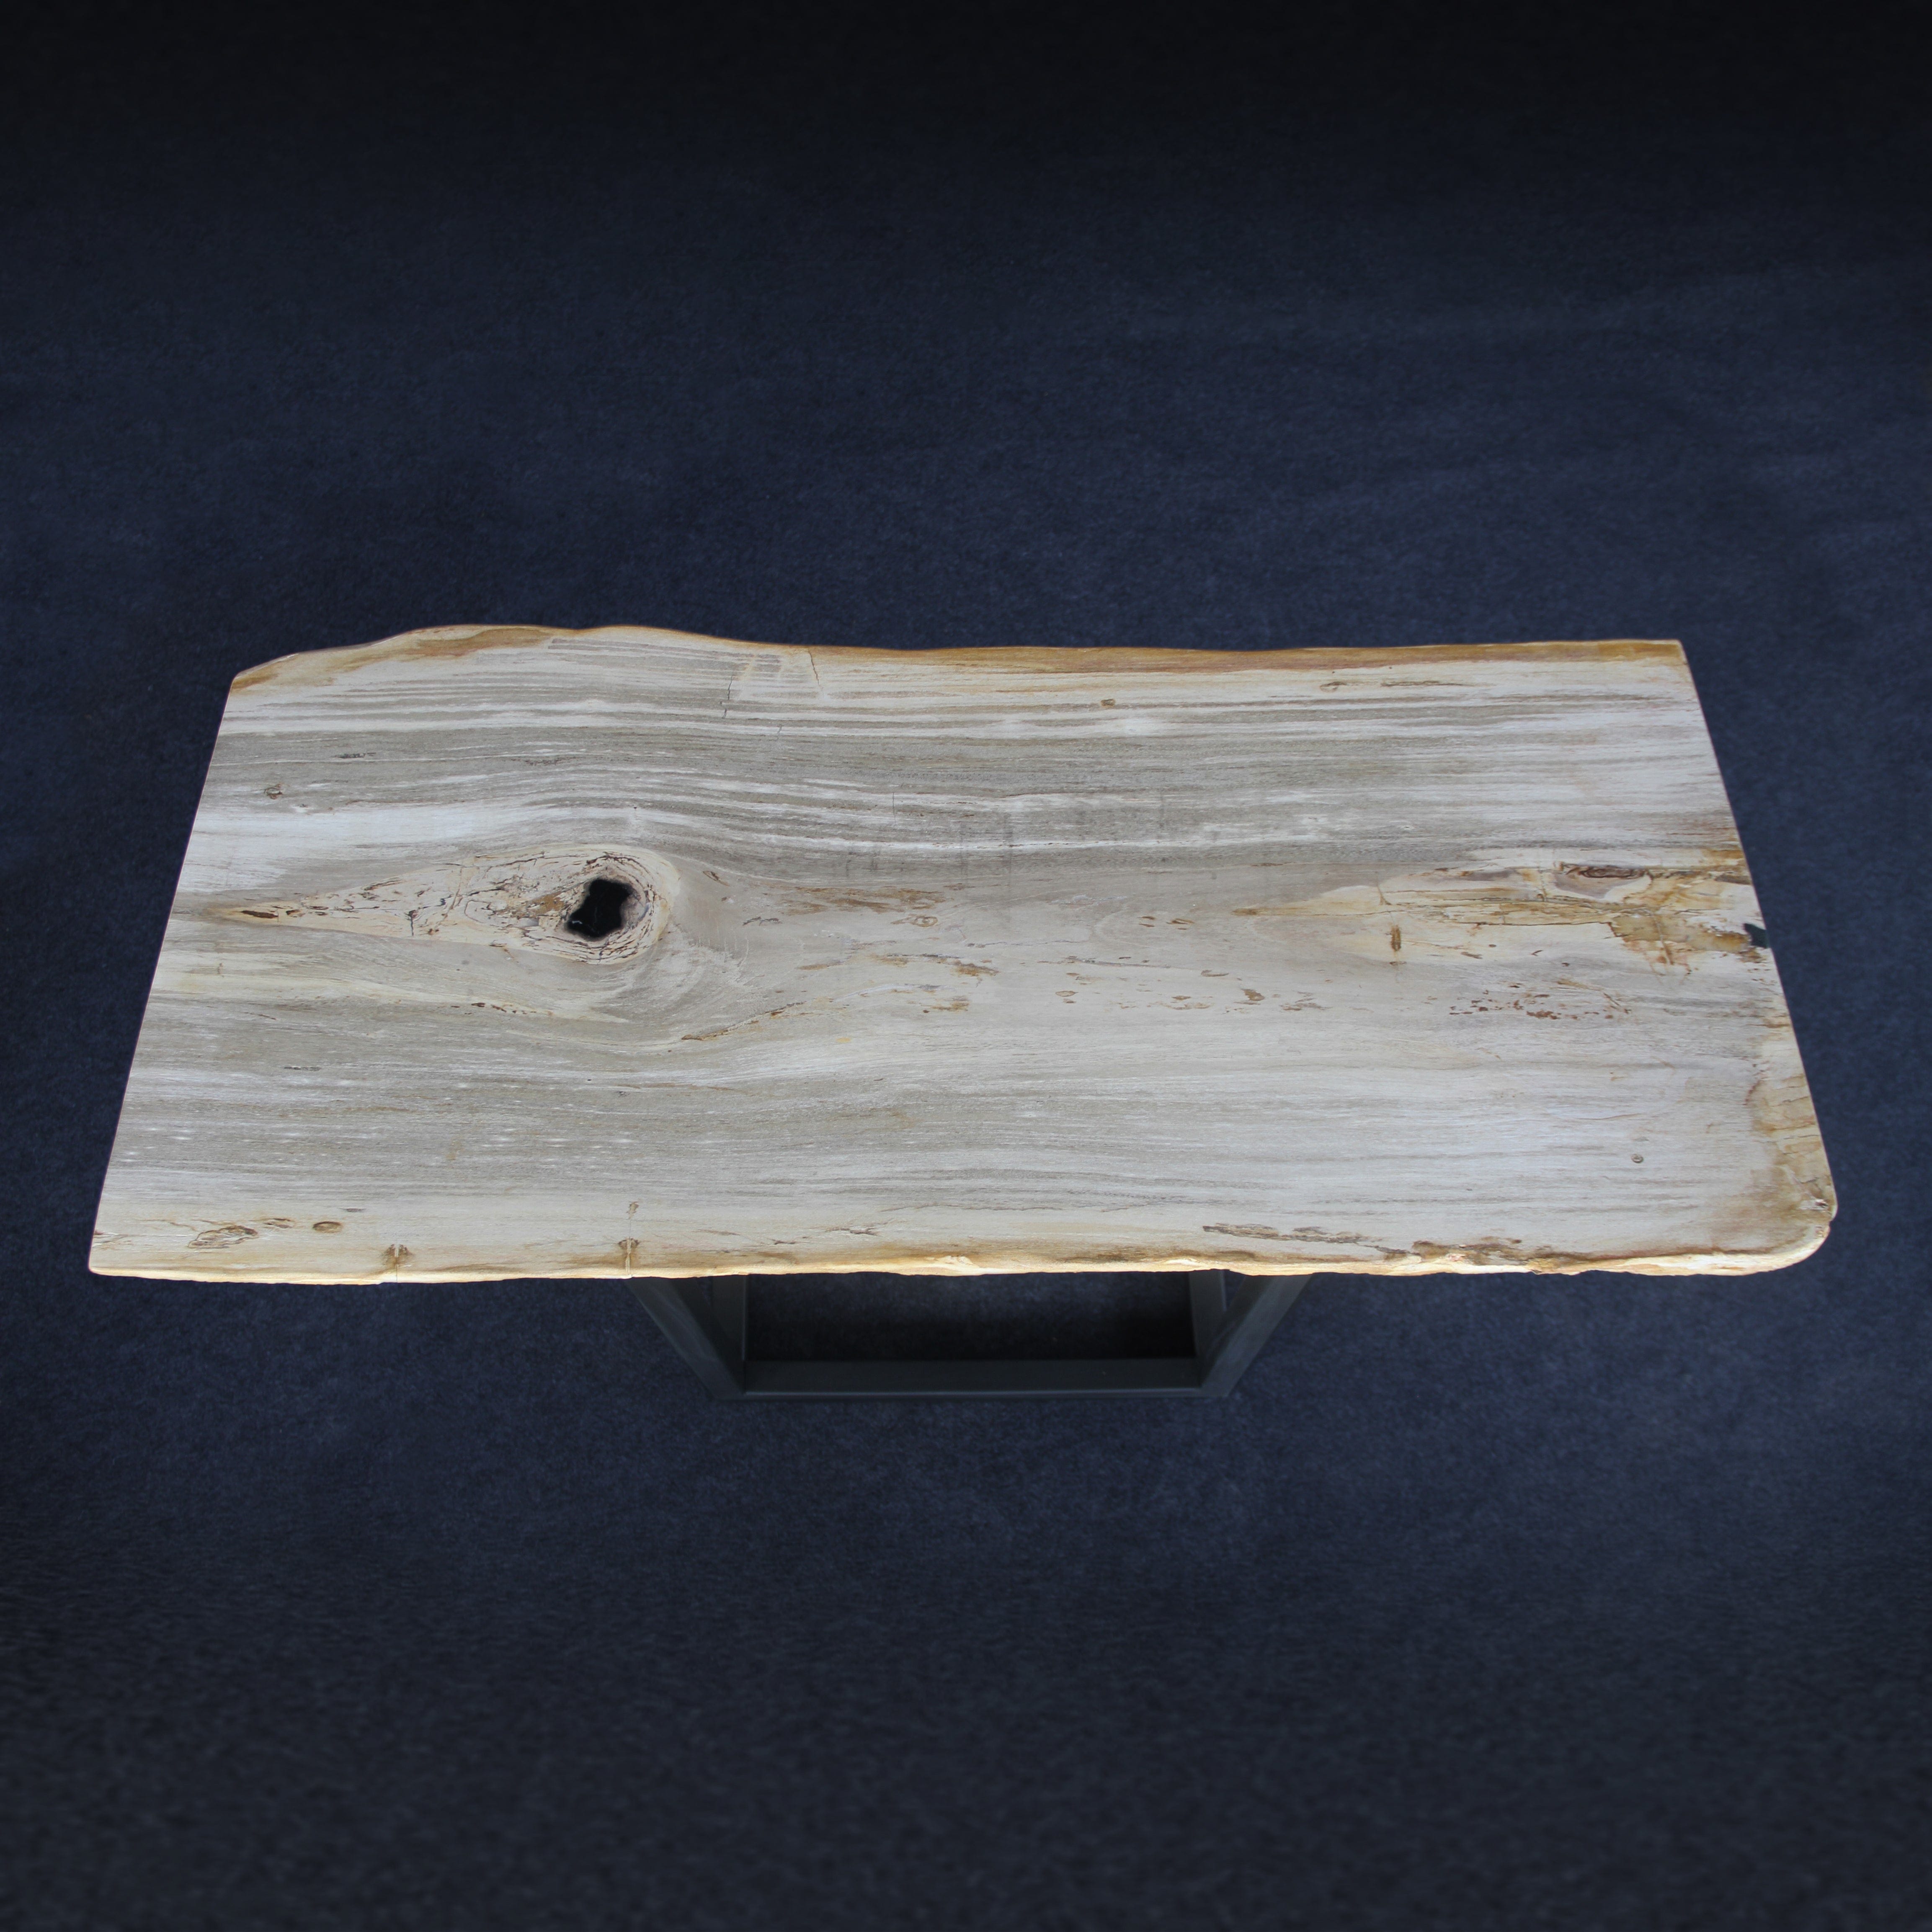 Kalifano Petrified Wood Petrified Wood Console Table 44" / 104 lbs PWR5400.005